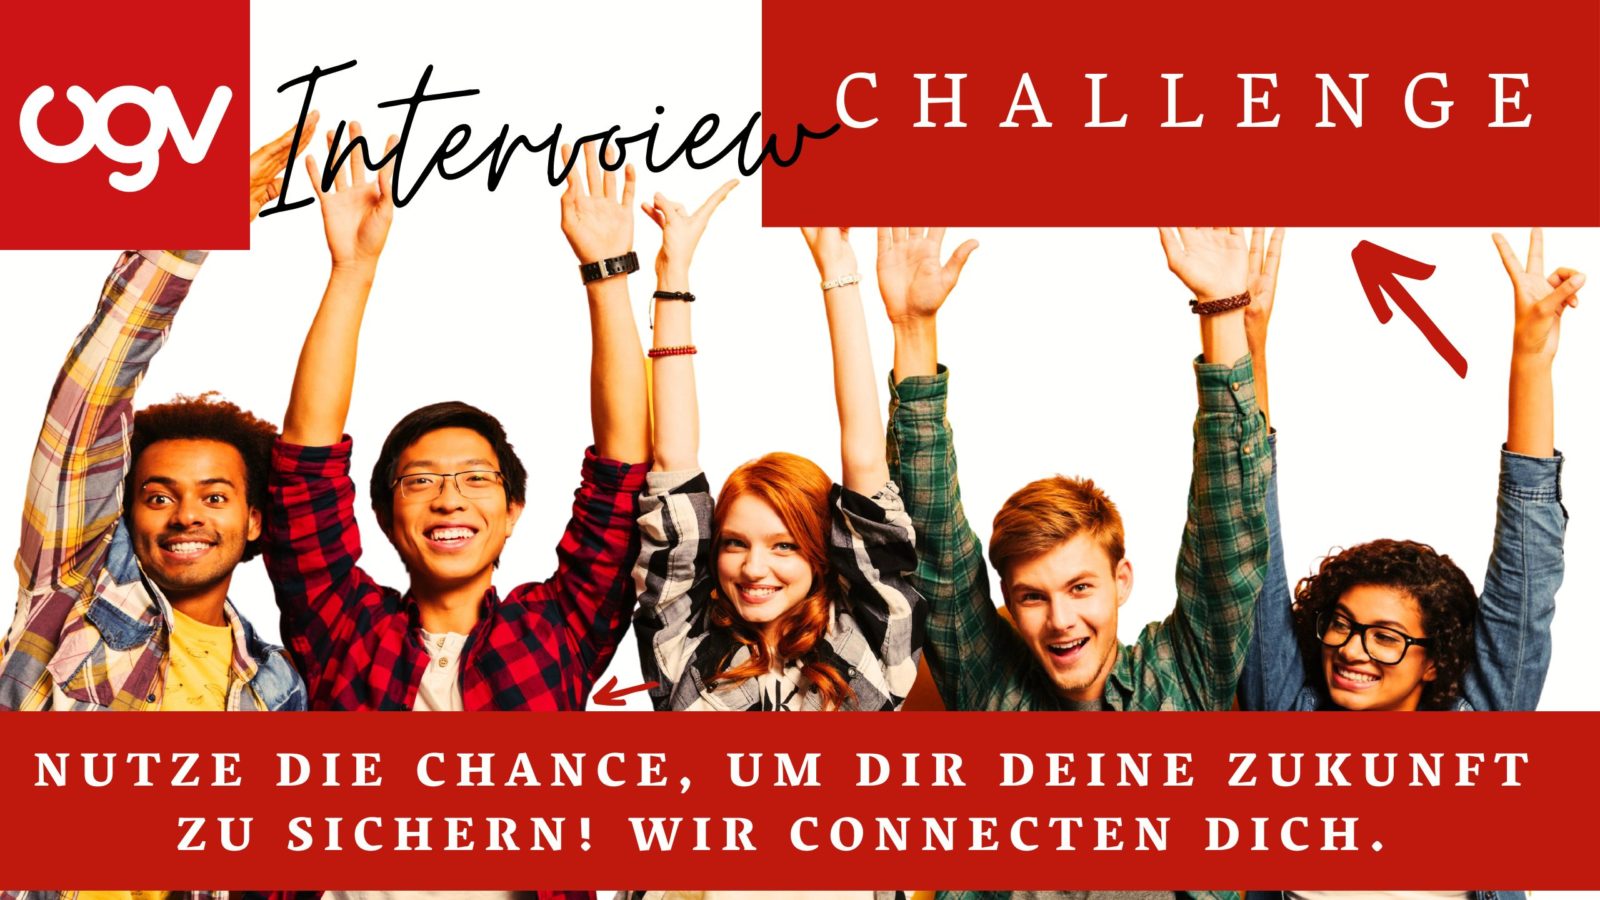 interview challenge schooltitle (2560 × 1440 px)